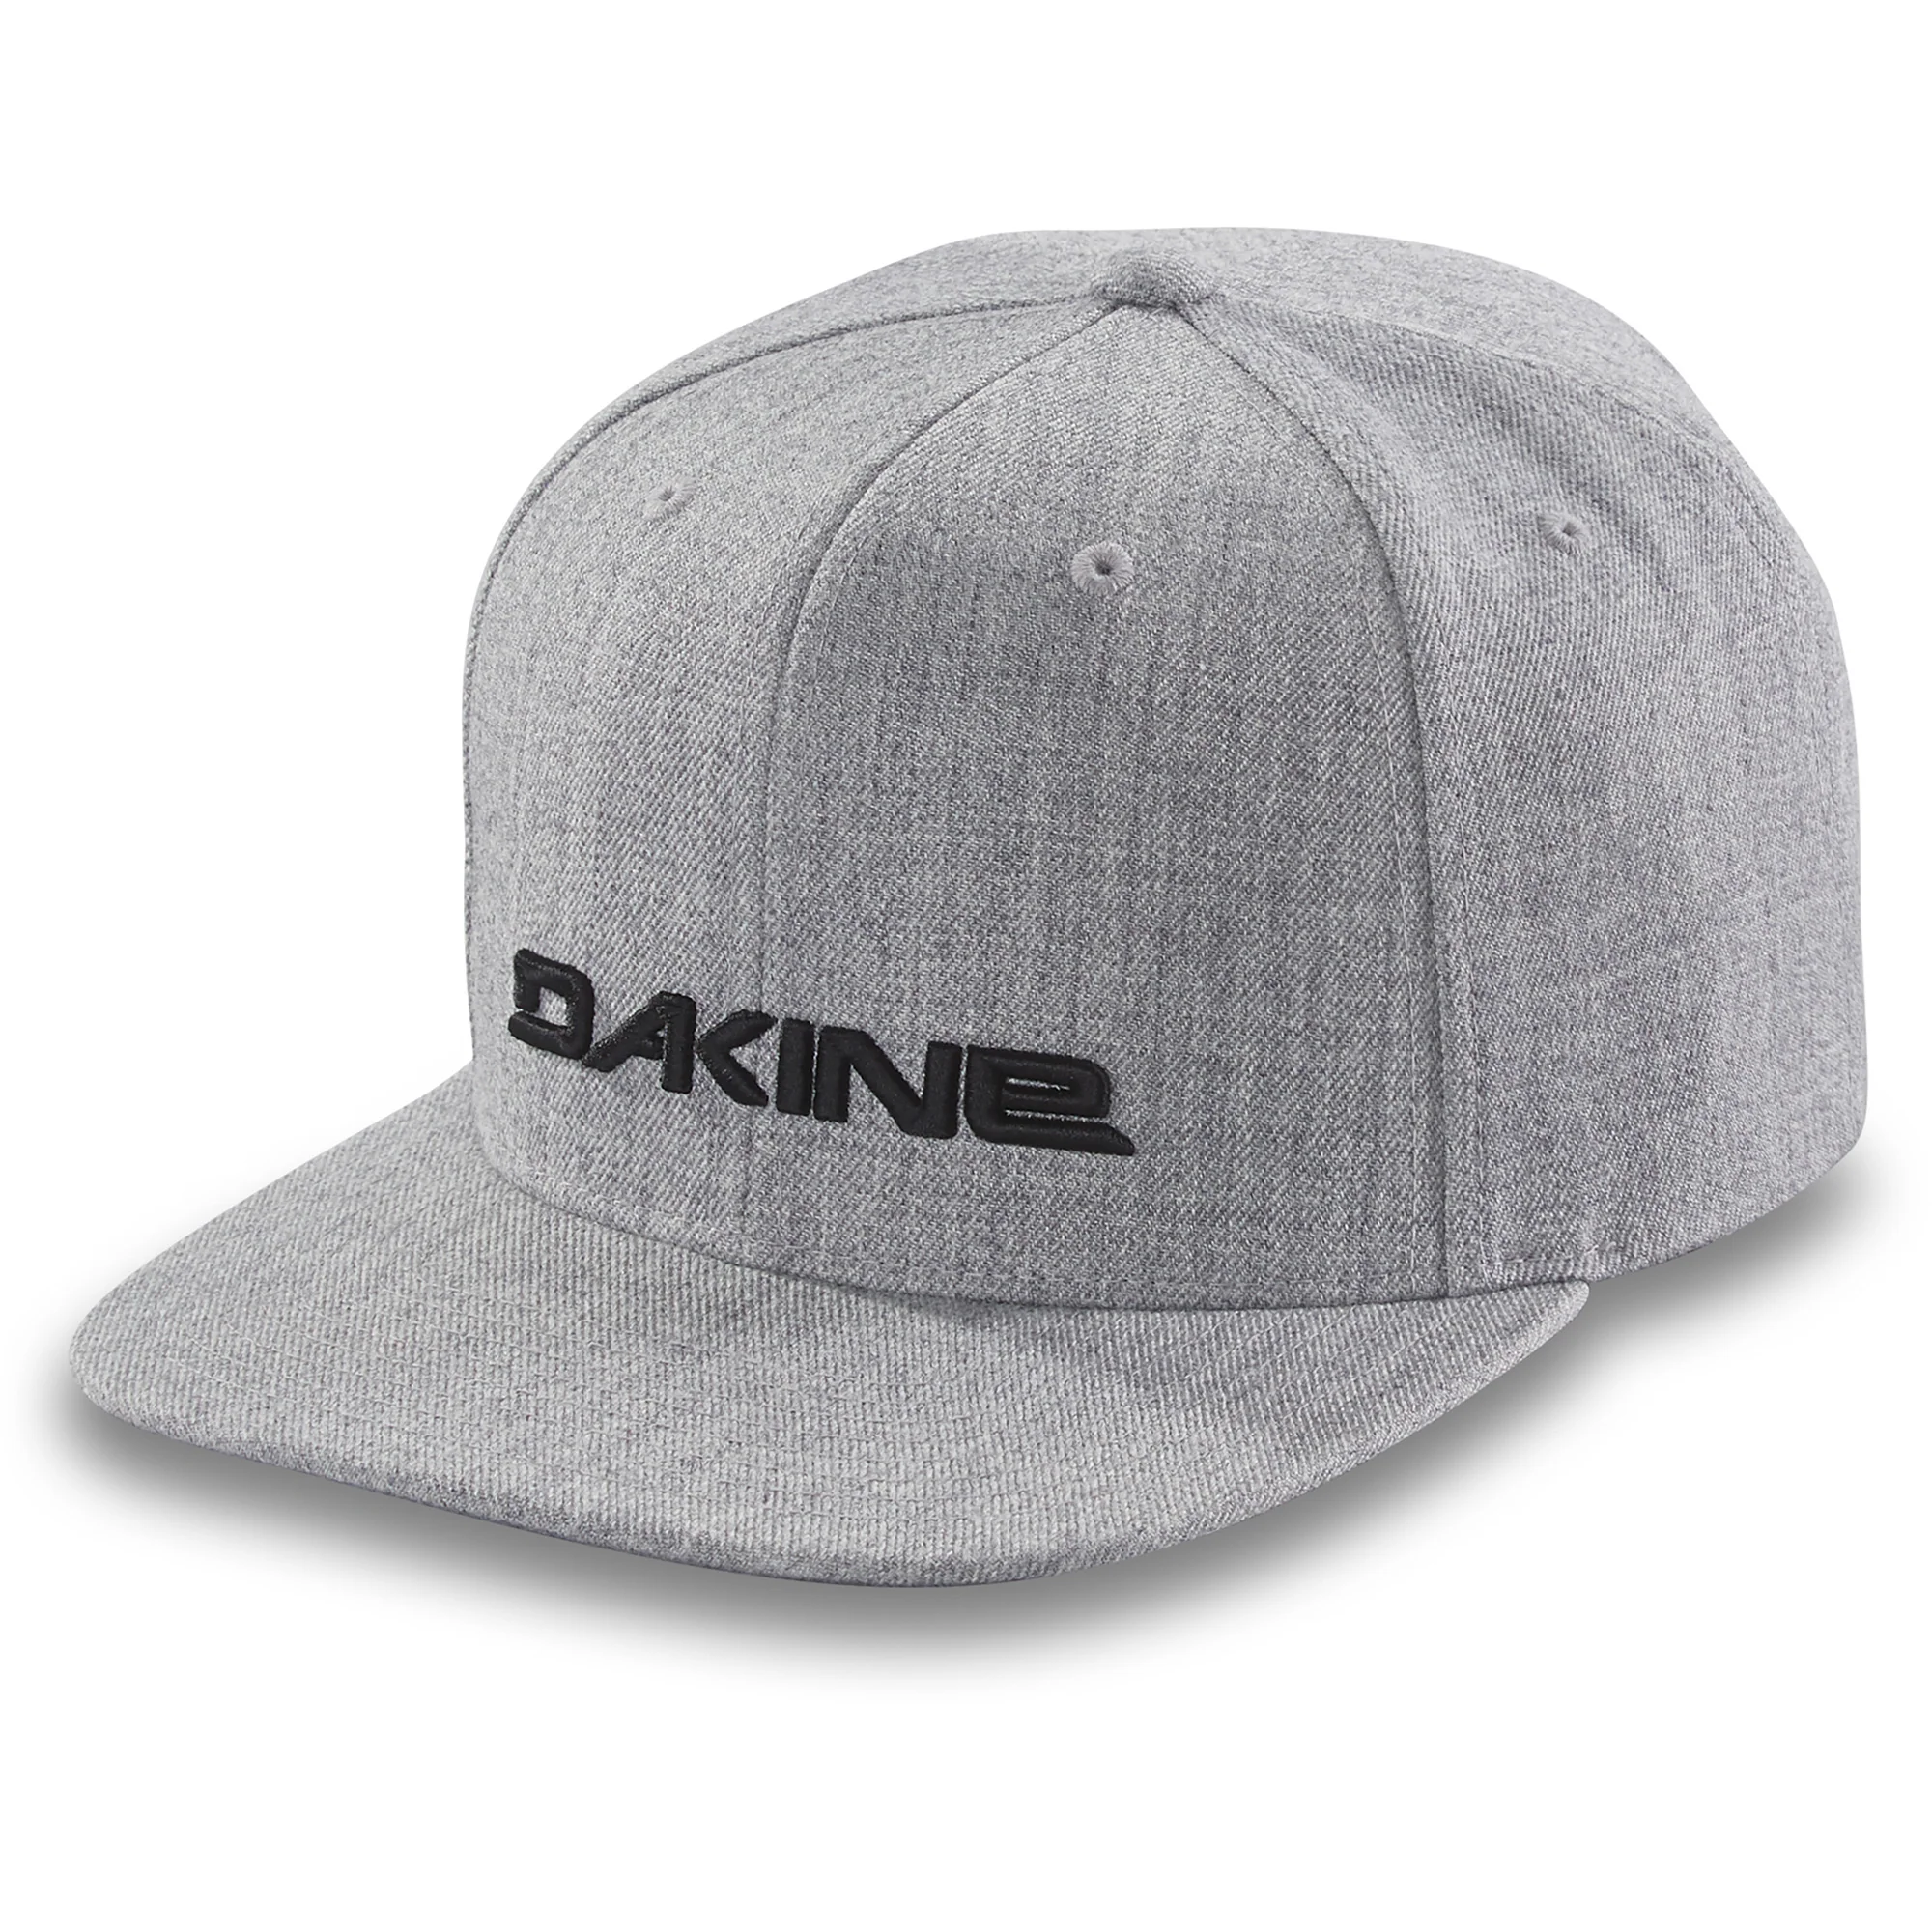 CLASSIC SNAPBACK HAT (heather grey) - DAKINE